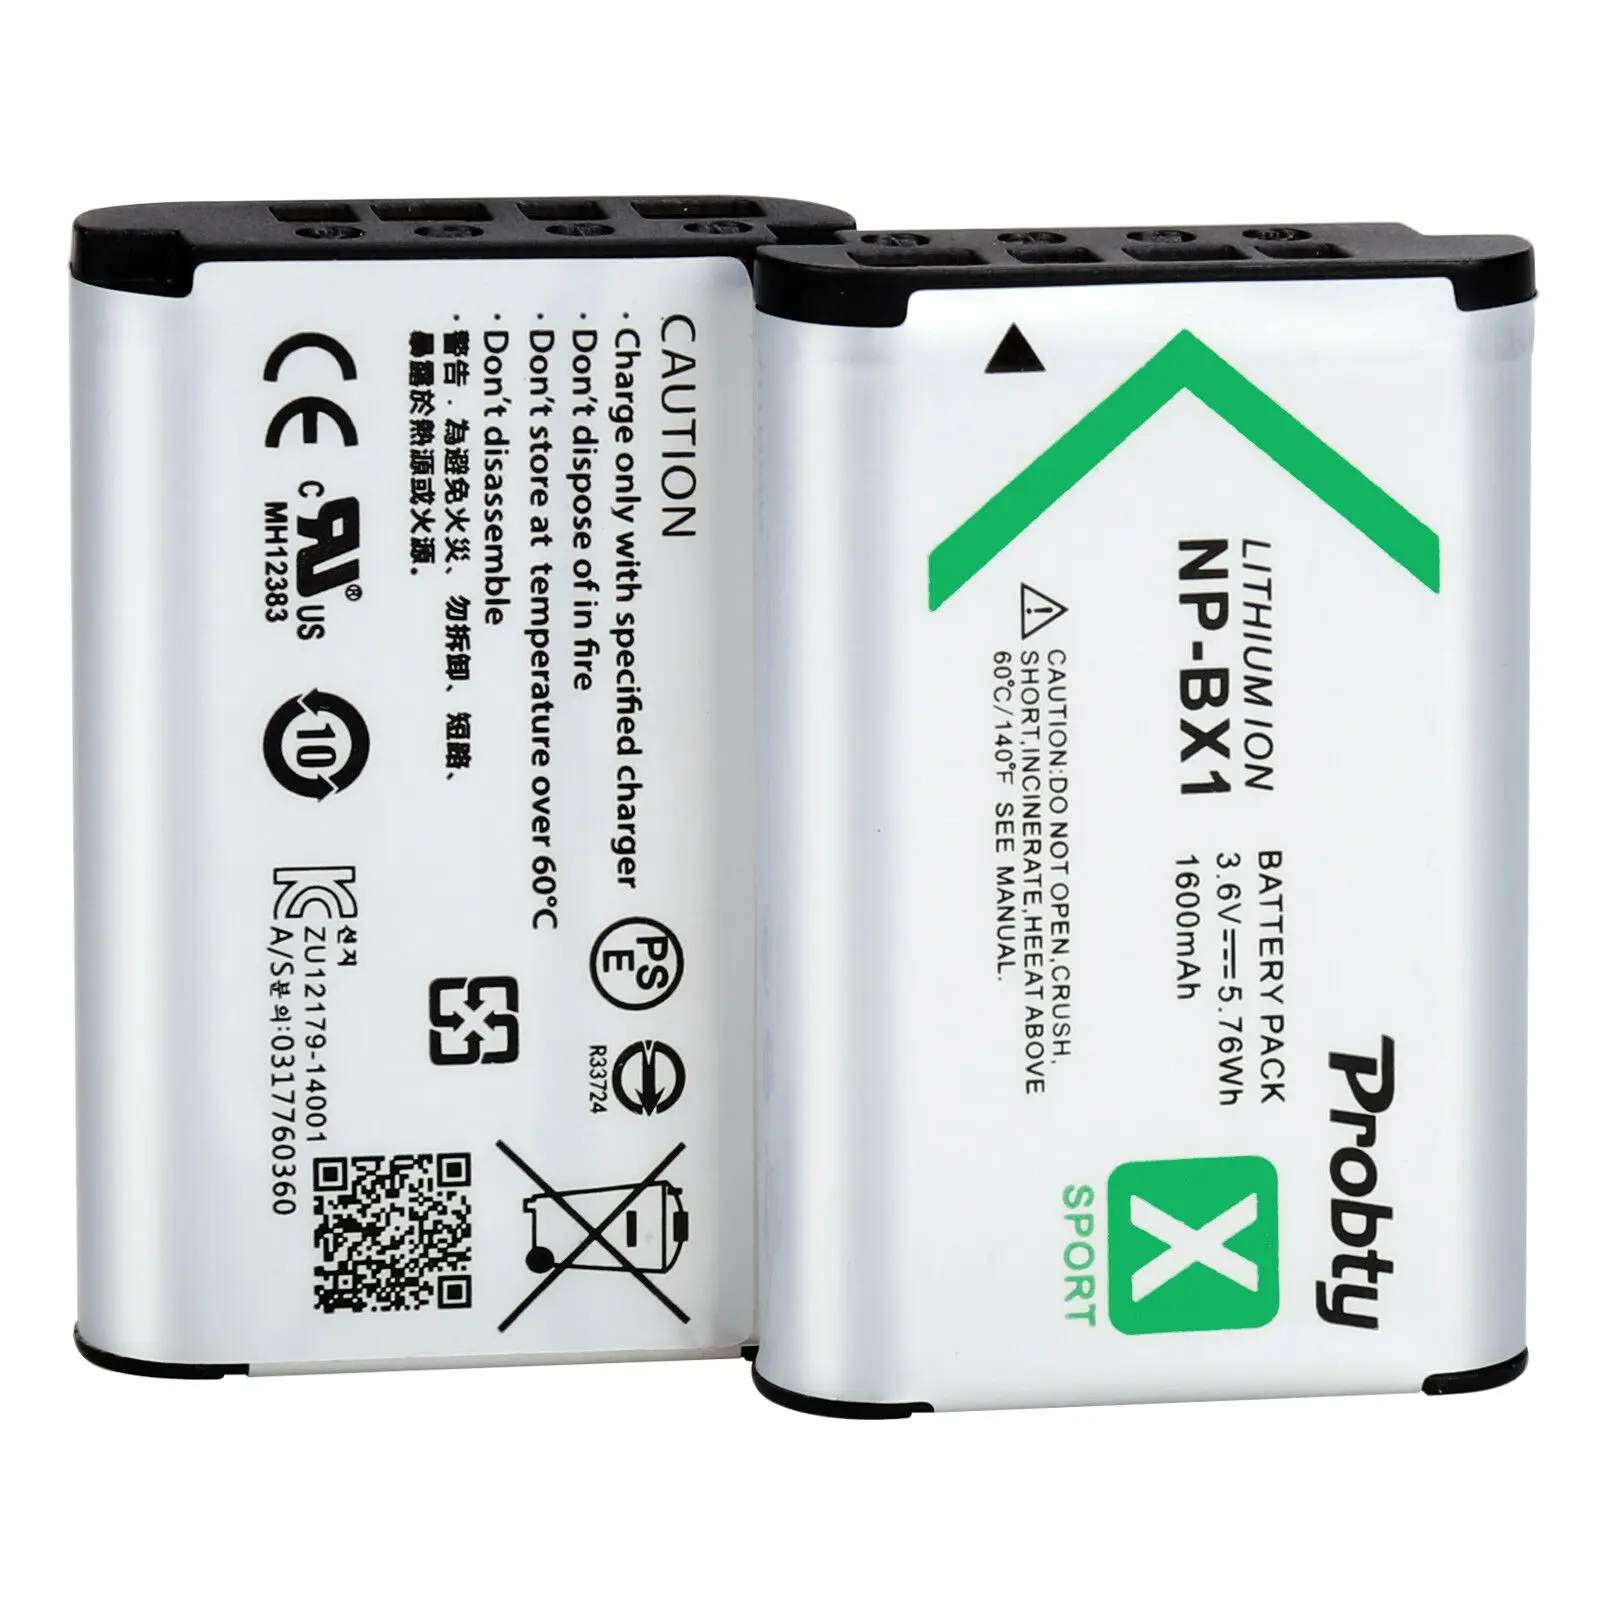 PROBTY 2 шт. NP-BX1 NP BX1 Батарейки+ ЖК-дисплей Зарядное устройство для sony DSC-RX100 DSC-WX500 Характеристическая вязкость полимера RX10 II HX300 WX300 HDR-AS15 CX240E MV1 AS30V